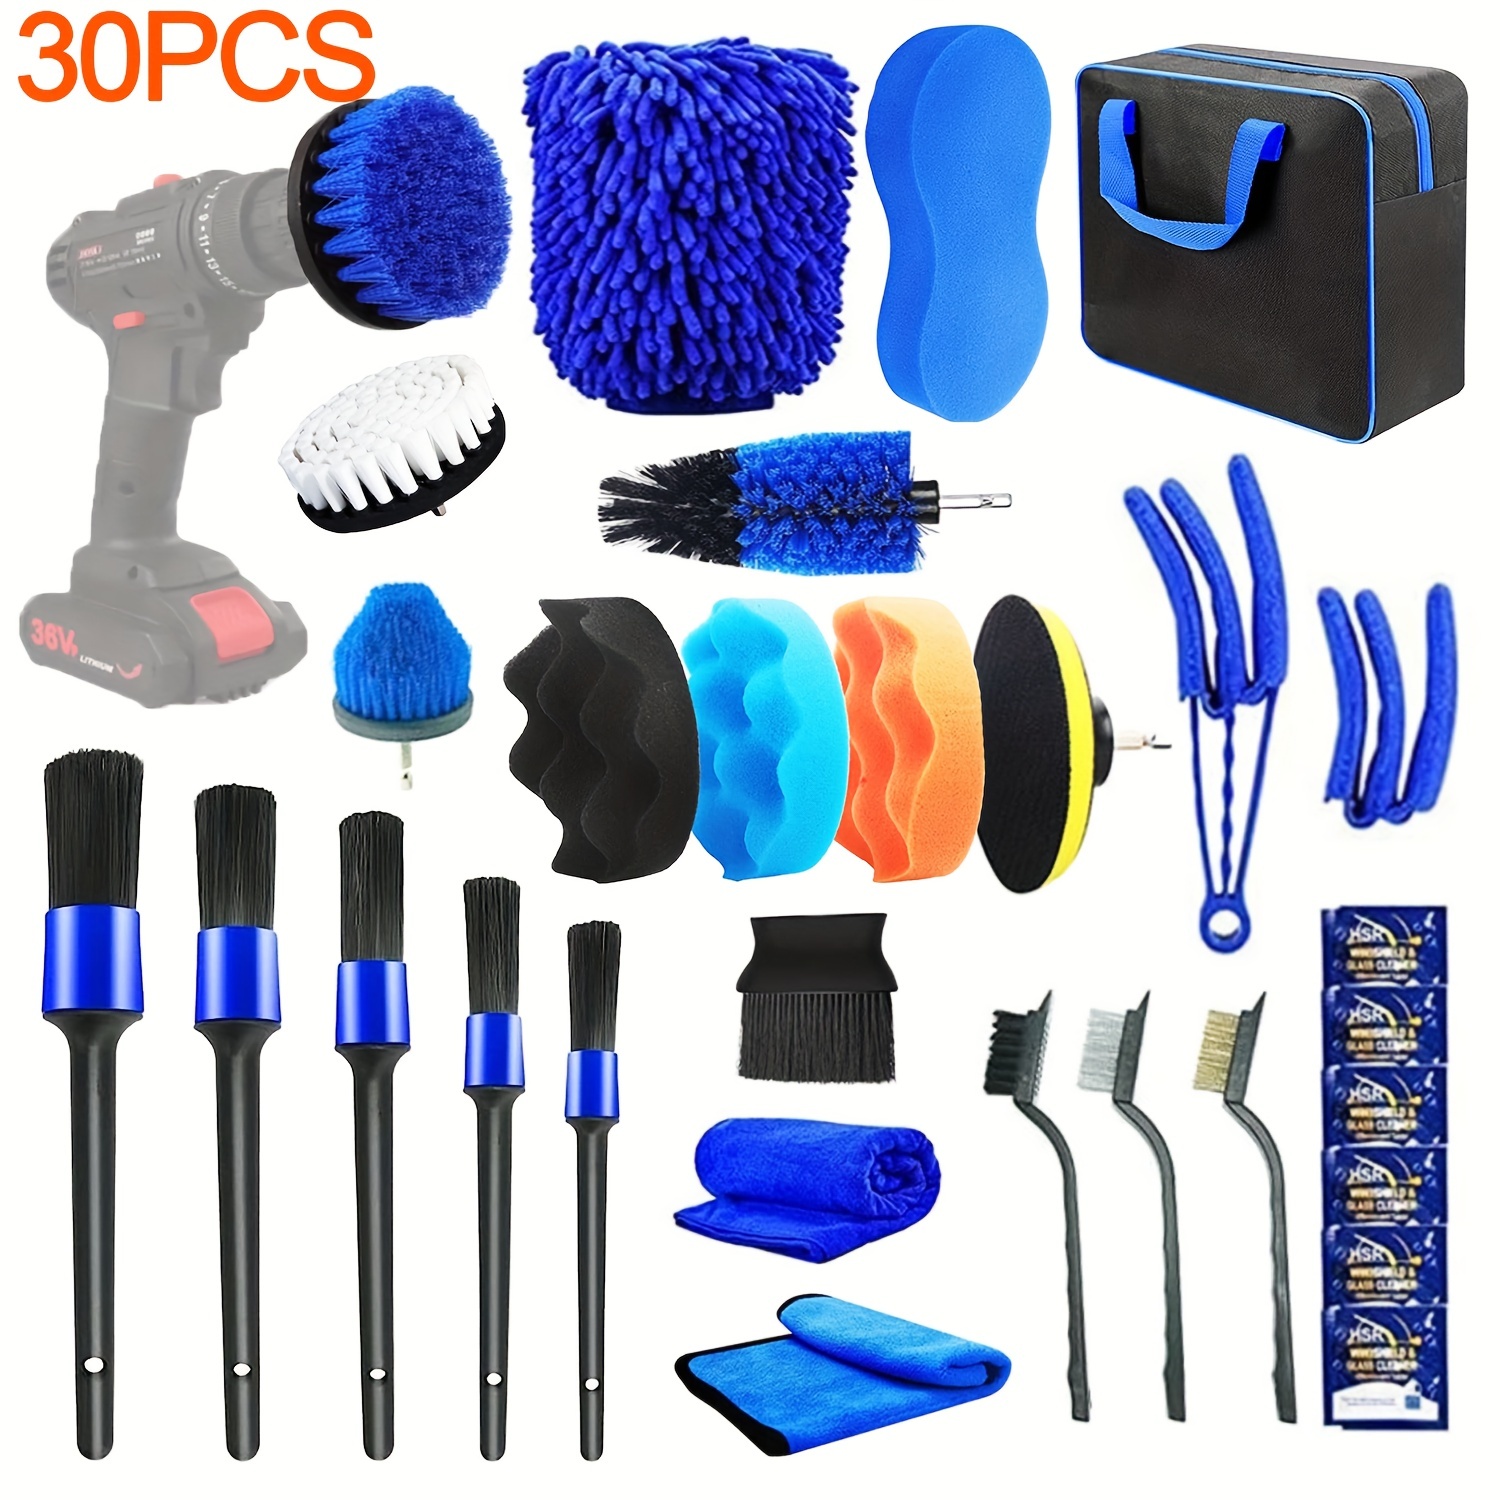 

30pcs Car Detailing Brush Set, Auto Detailing Drill Brush Set, Car Detailing Brushes, Car Buffing Sponge Pads Kit